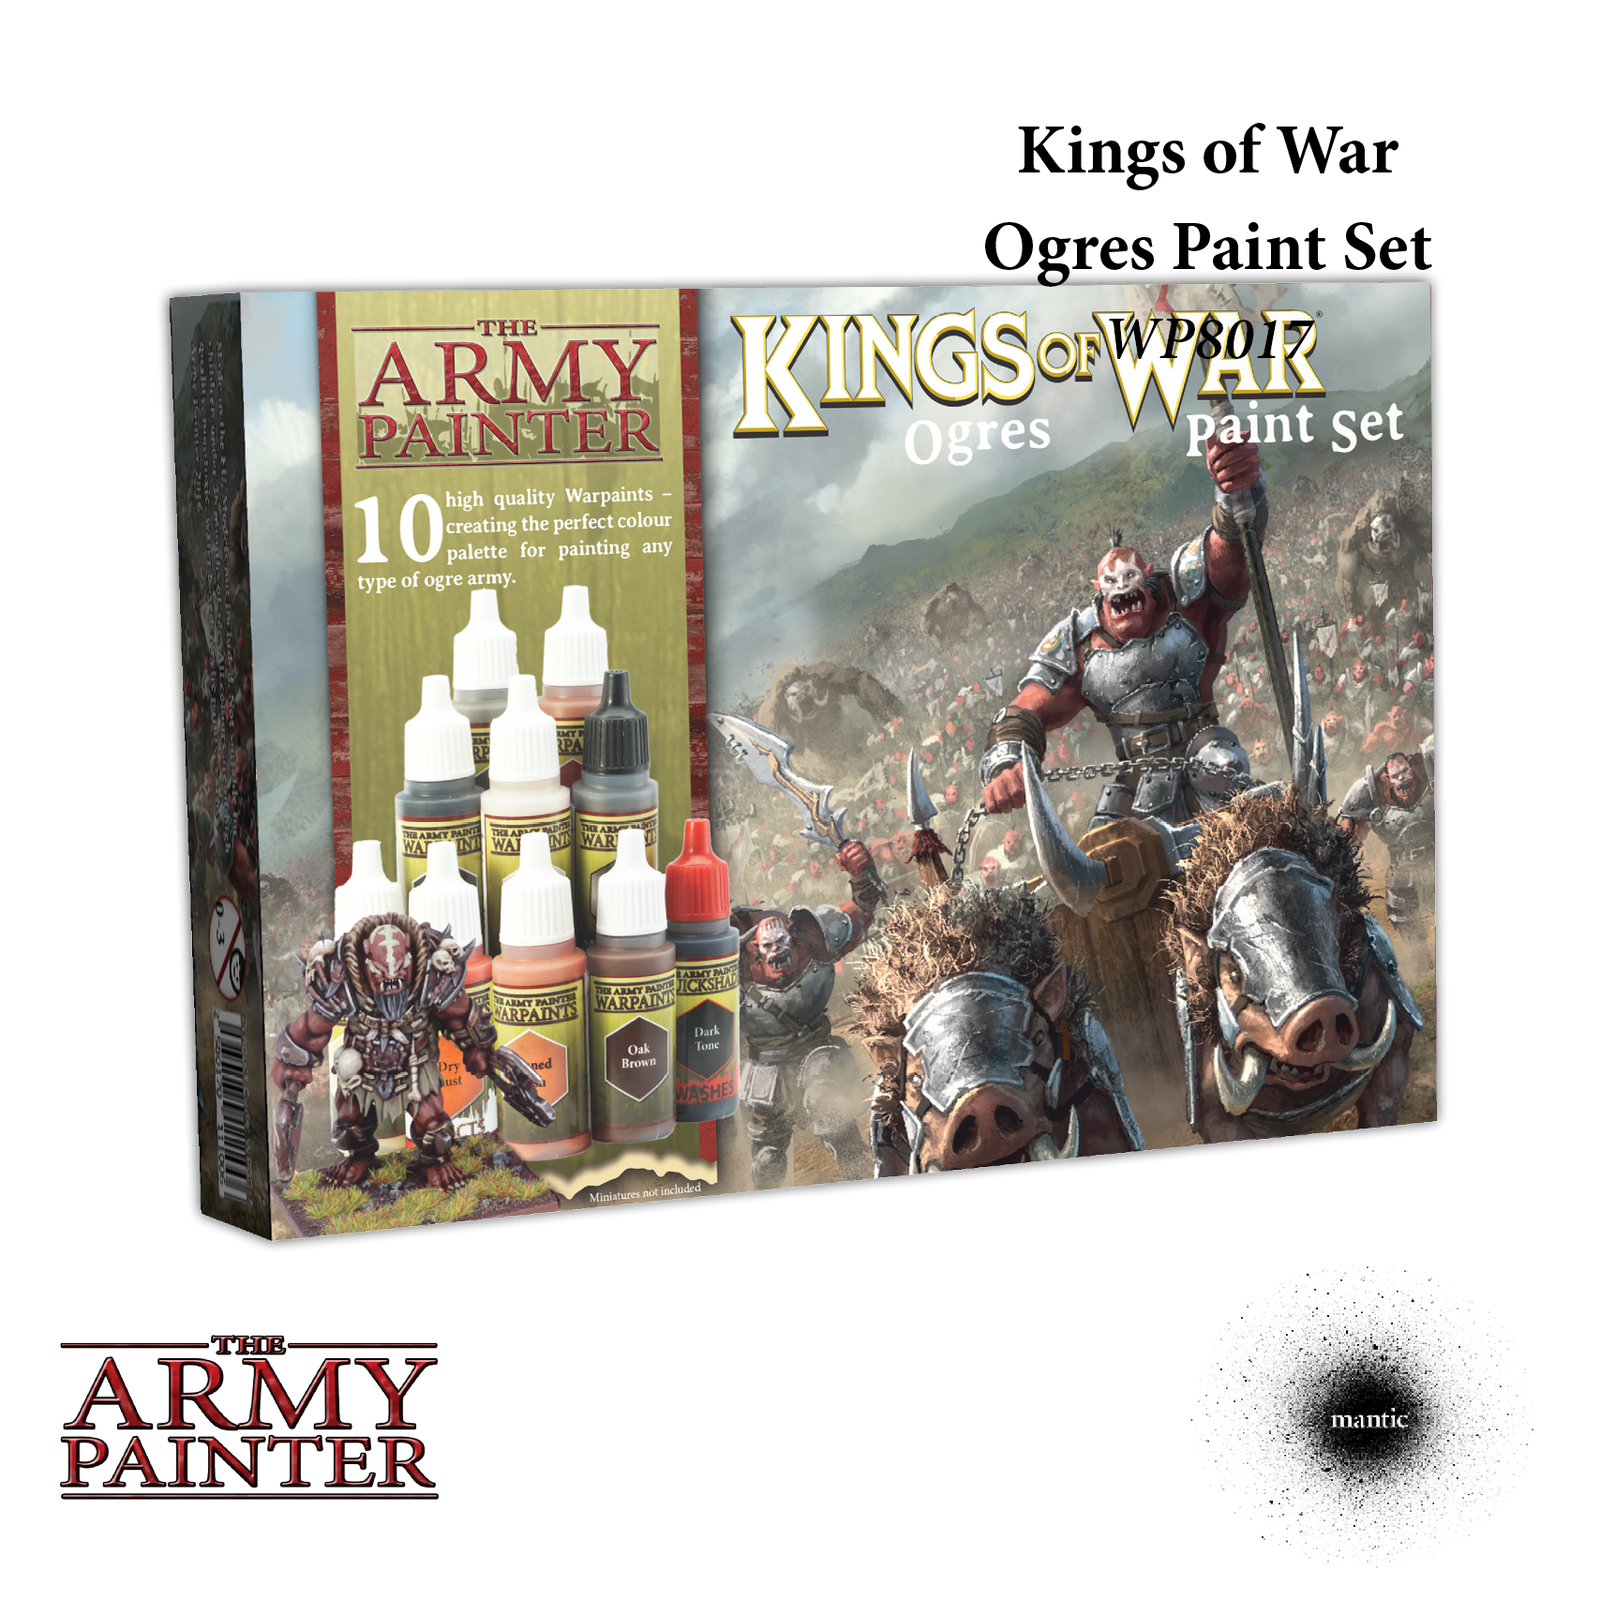 Army Painter Kings of War Ogres Paint Set